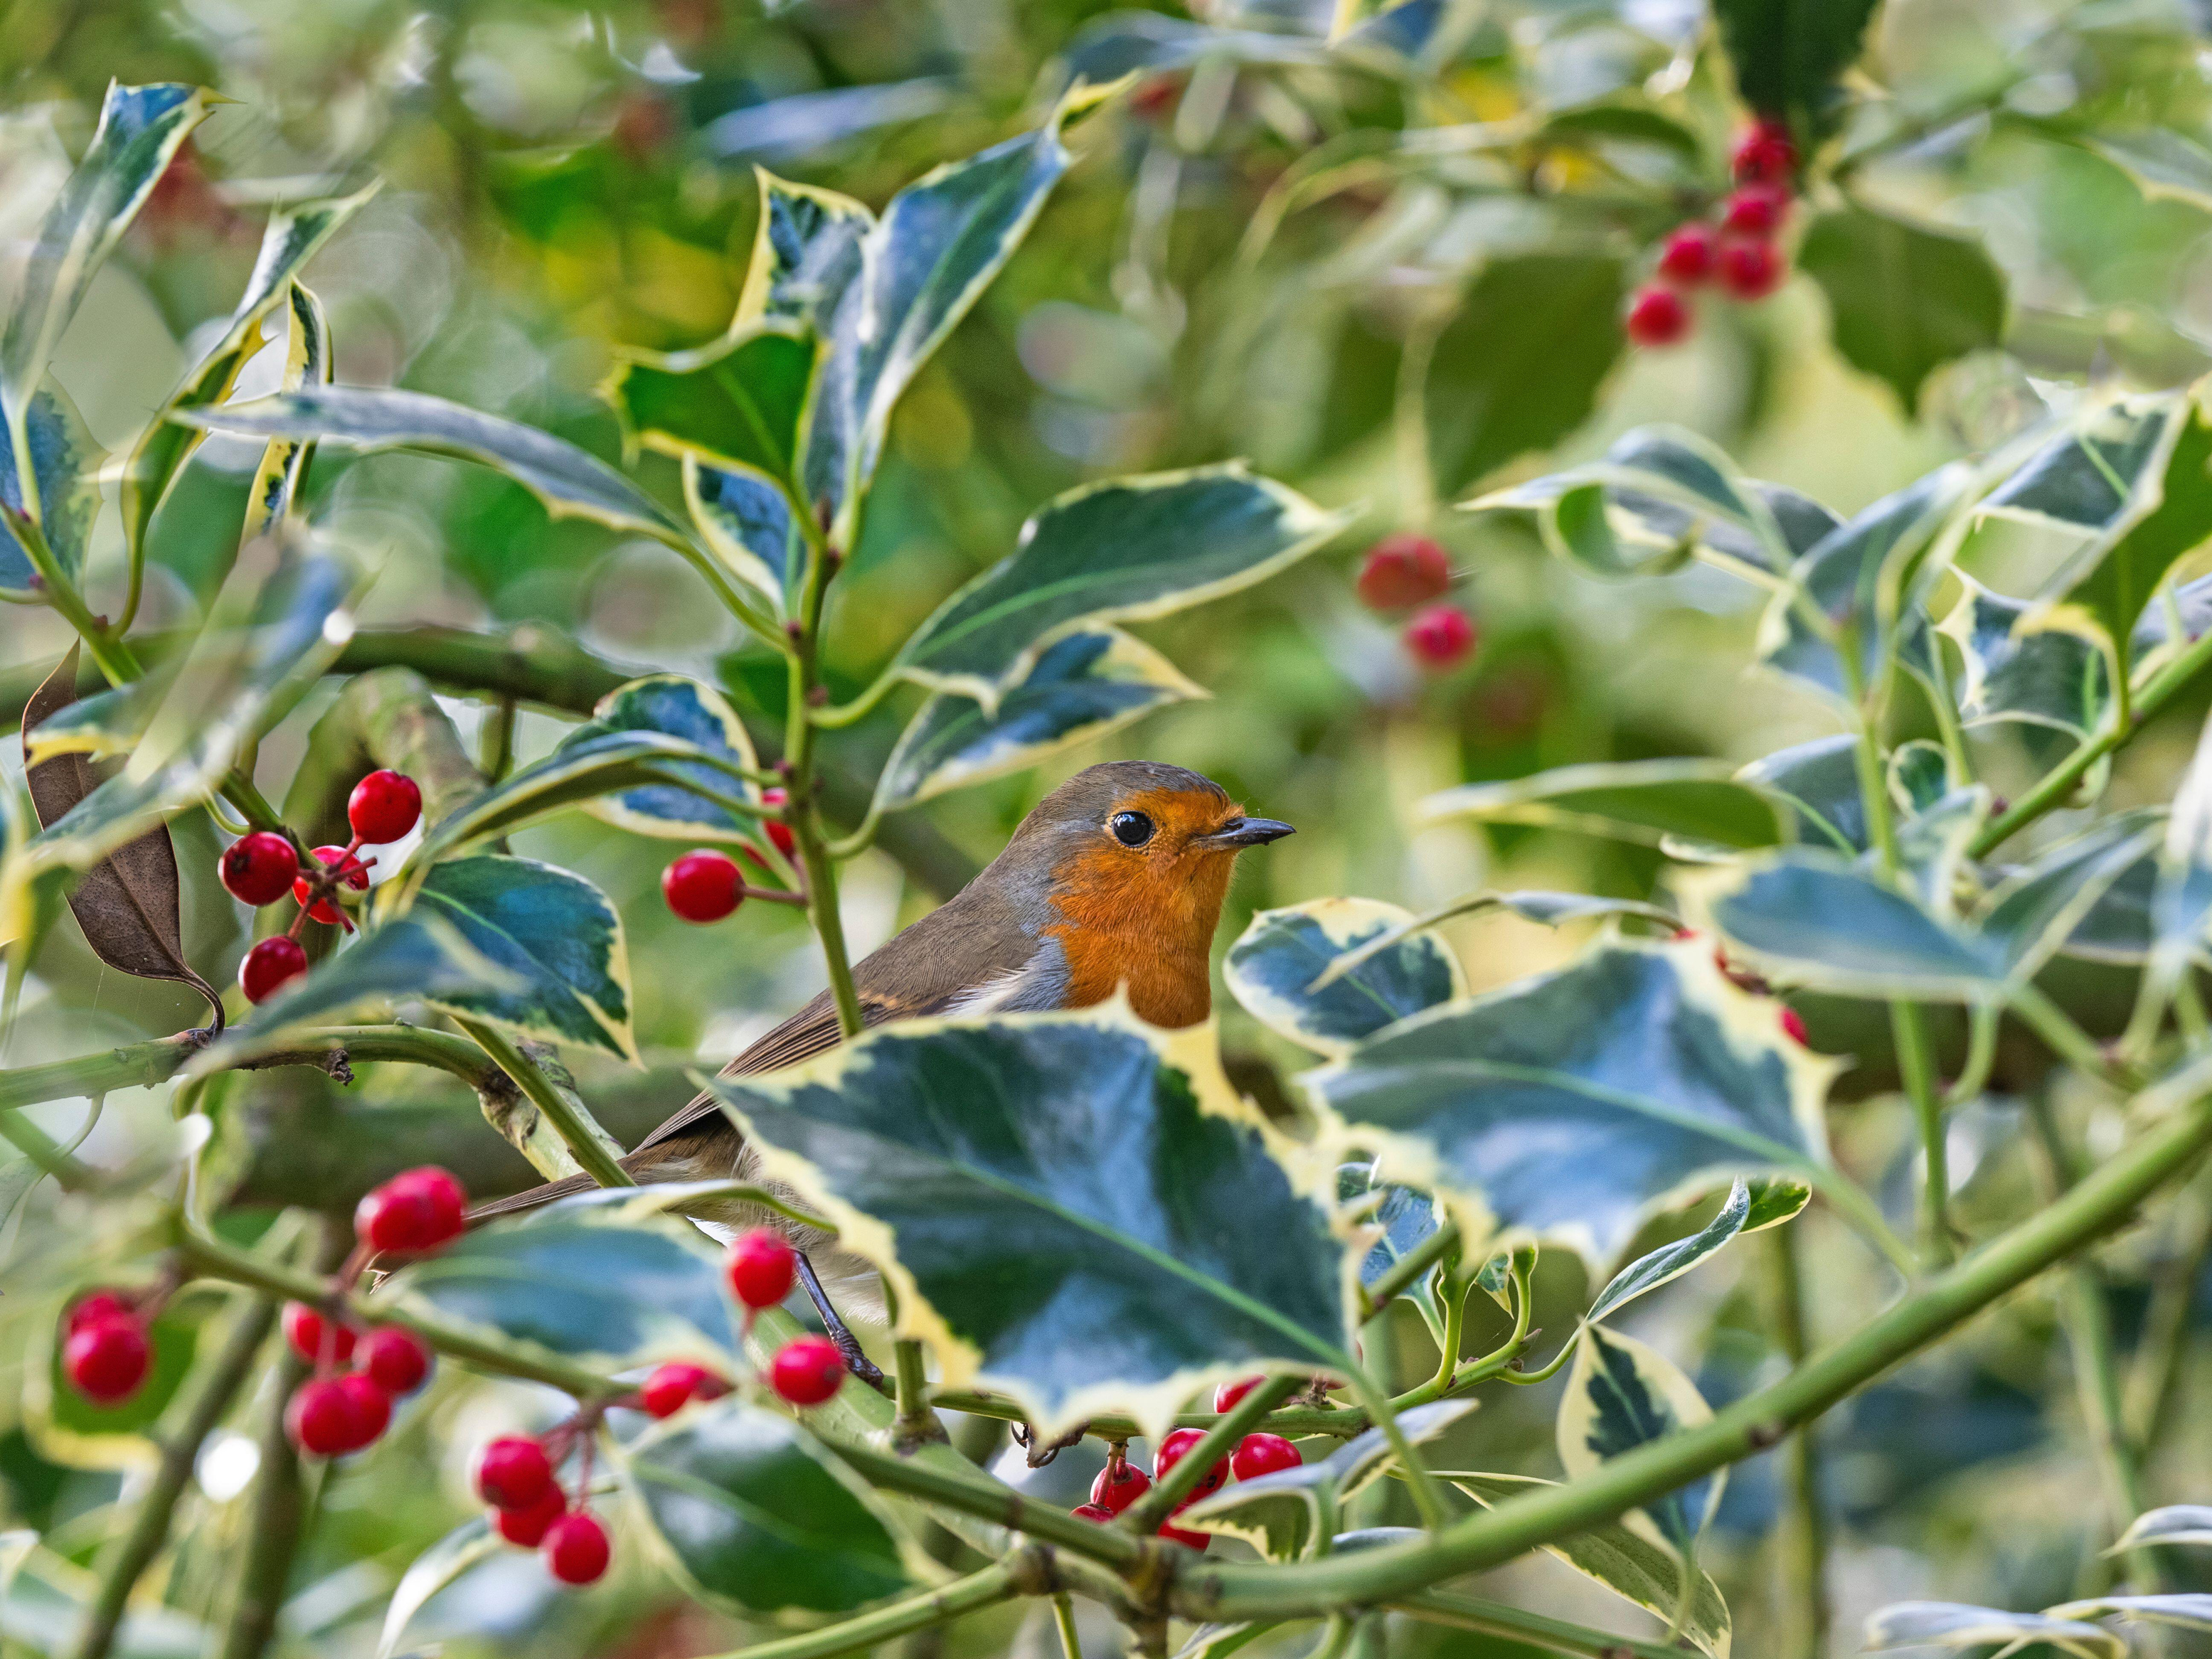 Robin in a holly bush (Alamy/PA)